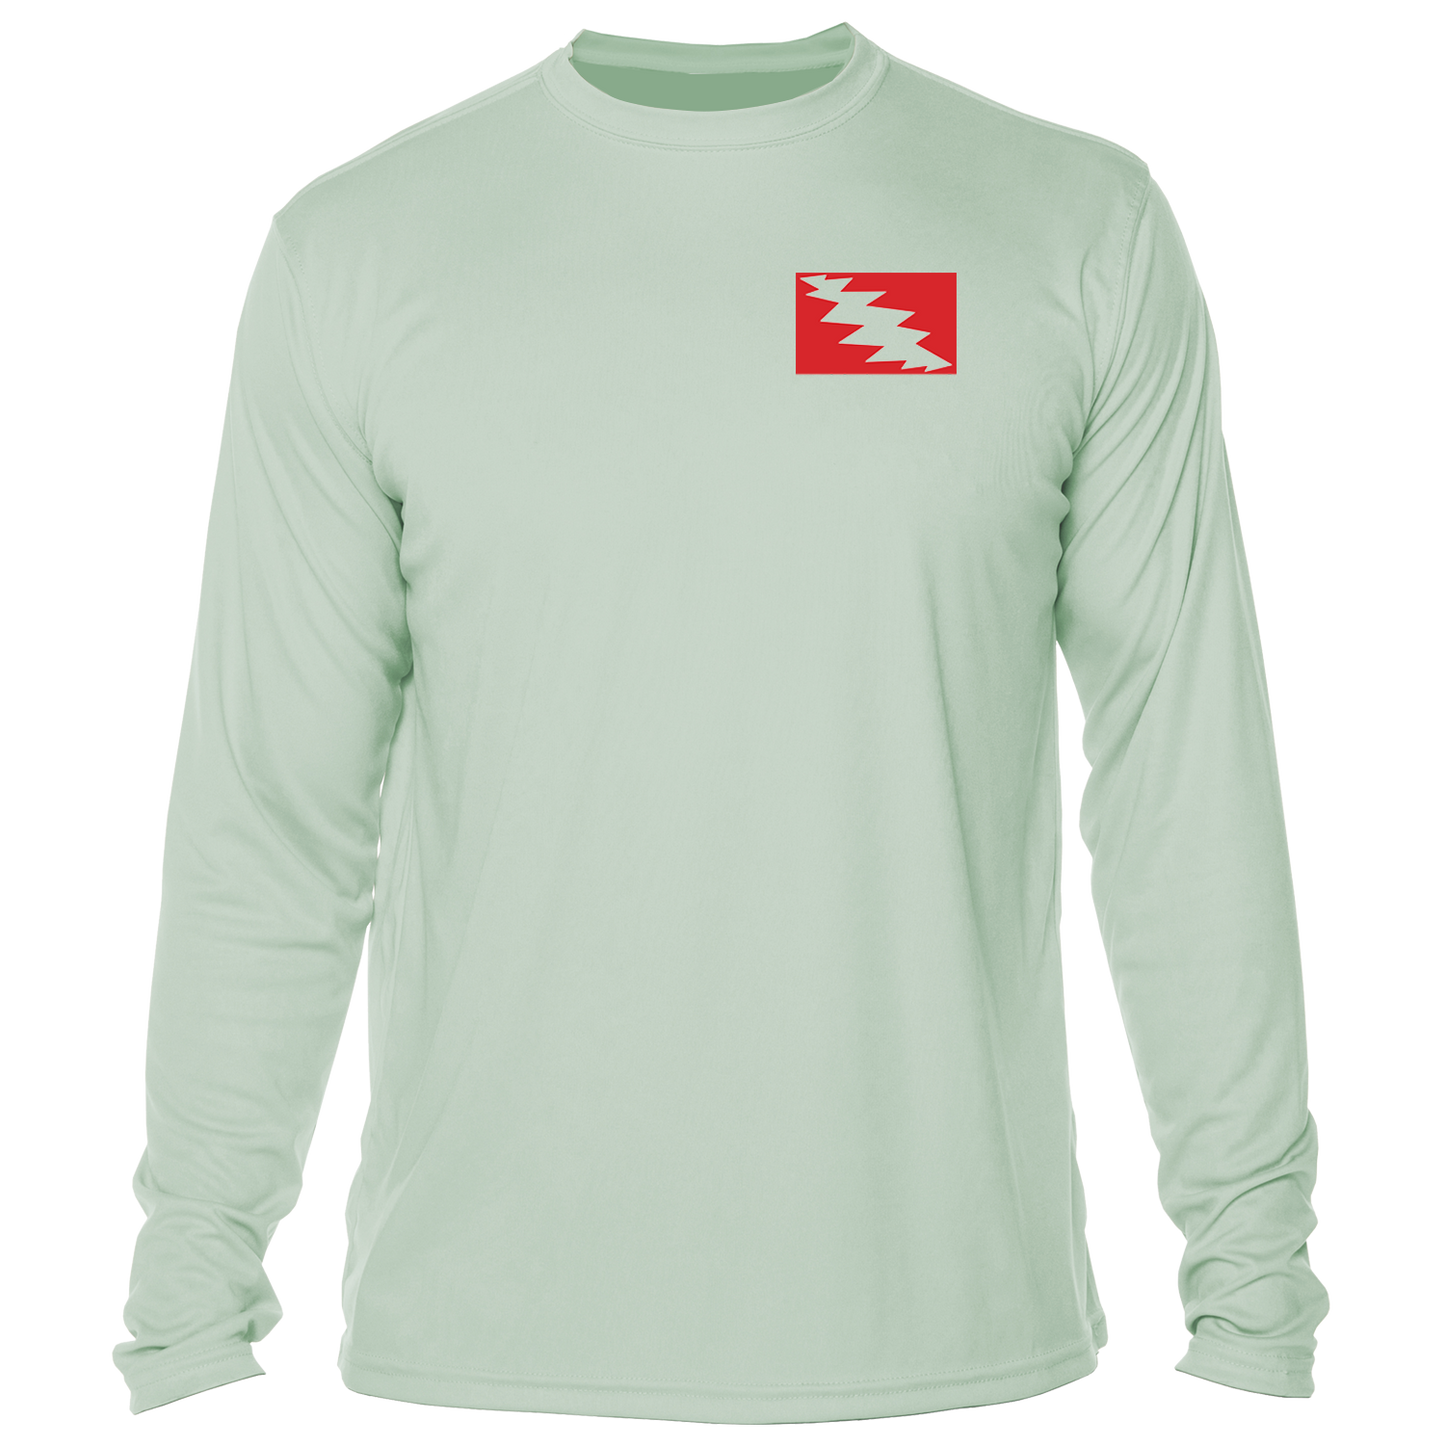 Grateful Diver Skeleton Diver UV Shirt in seagrass showing the front off figure